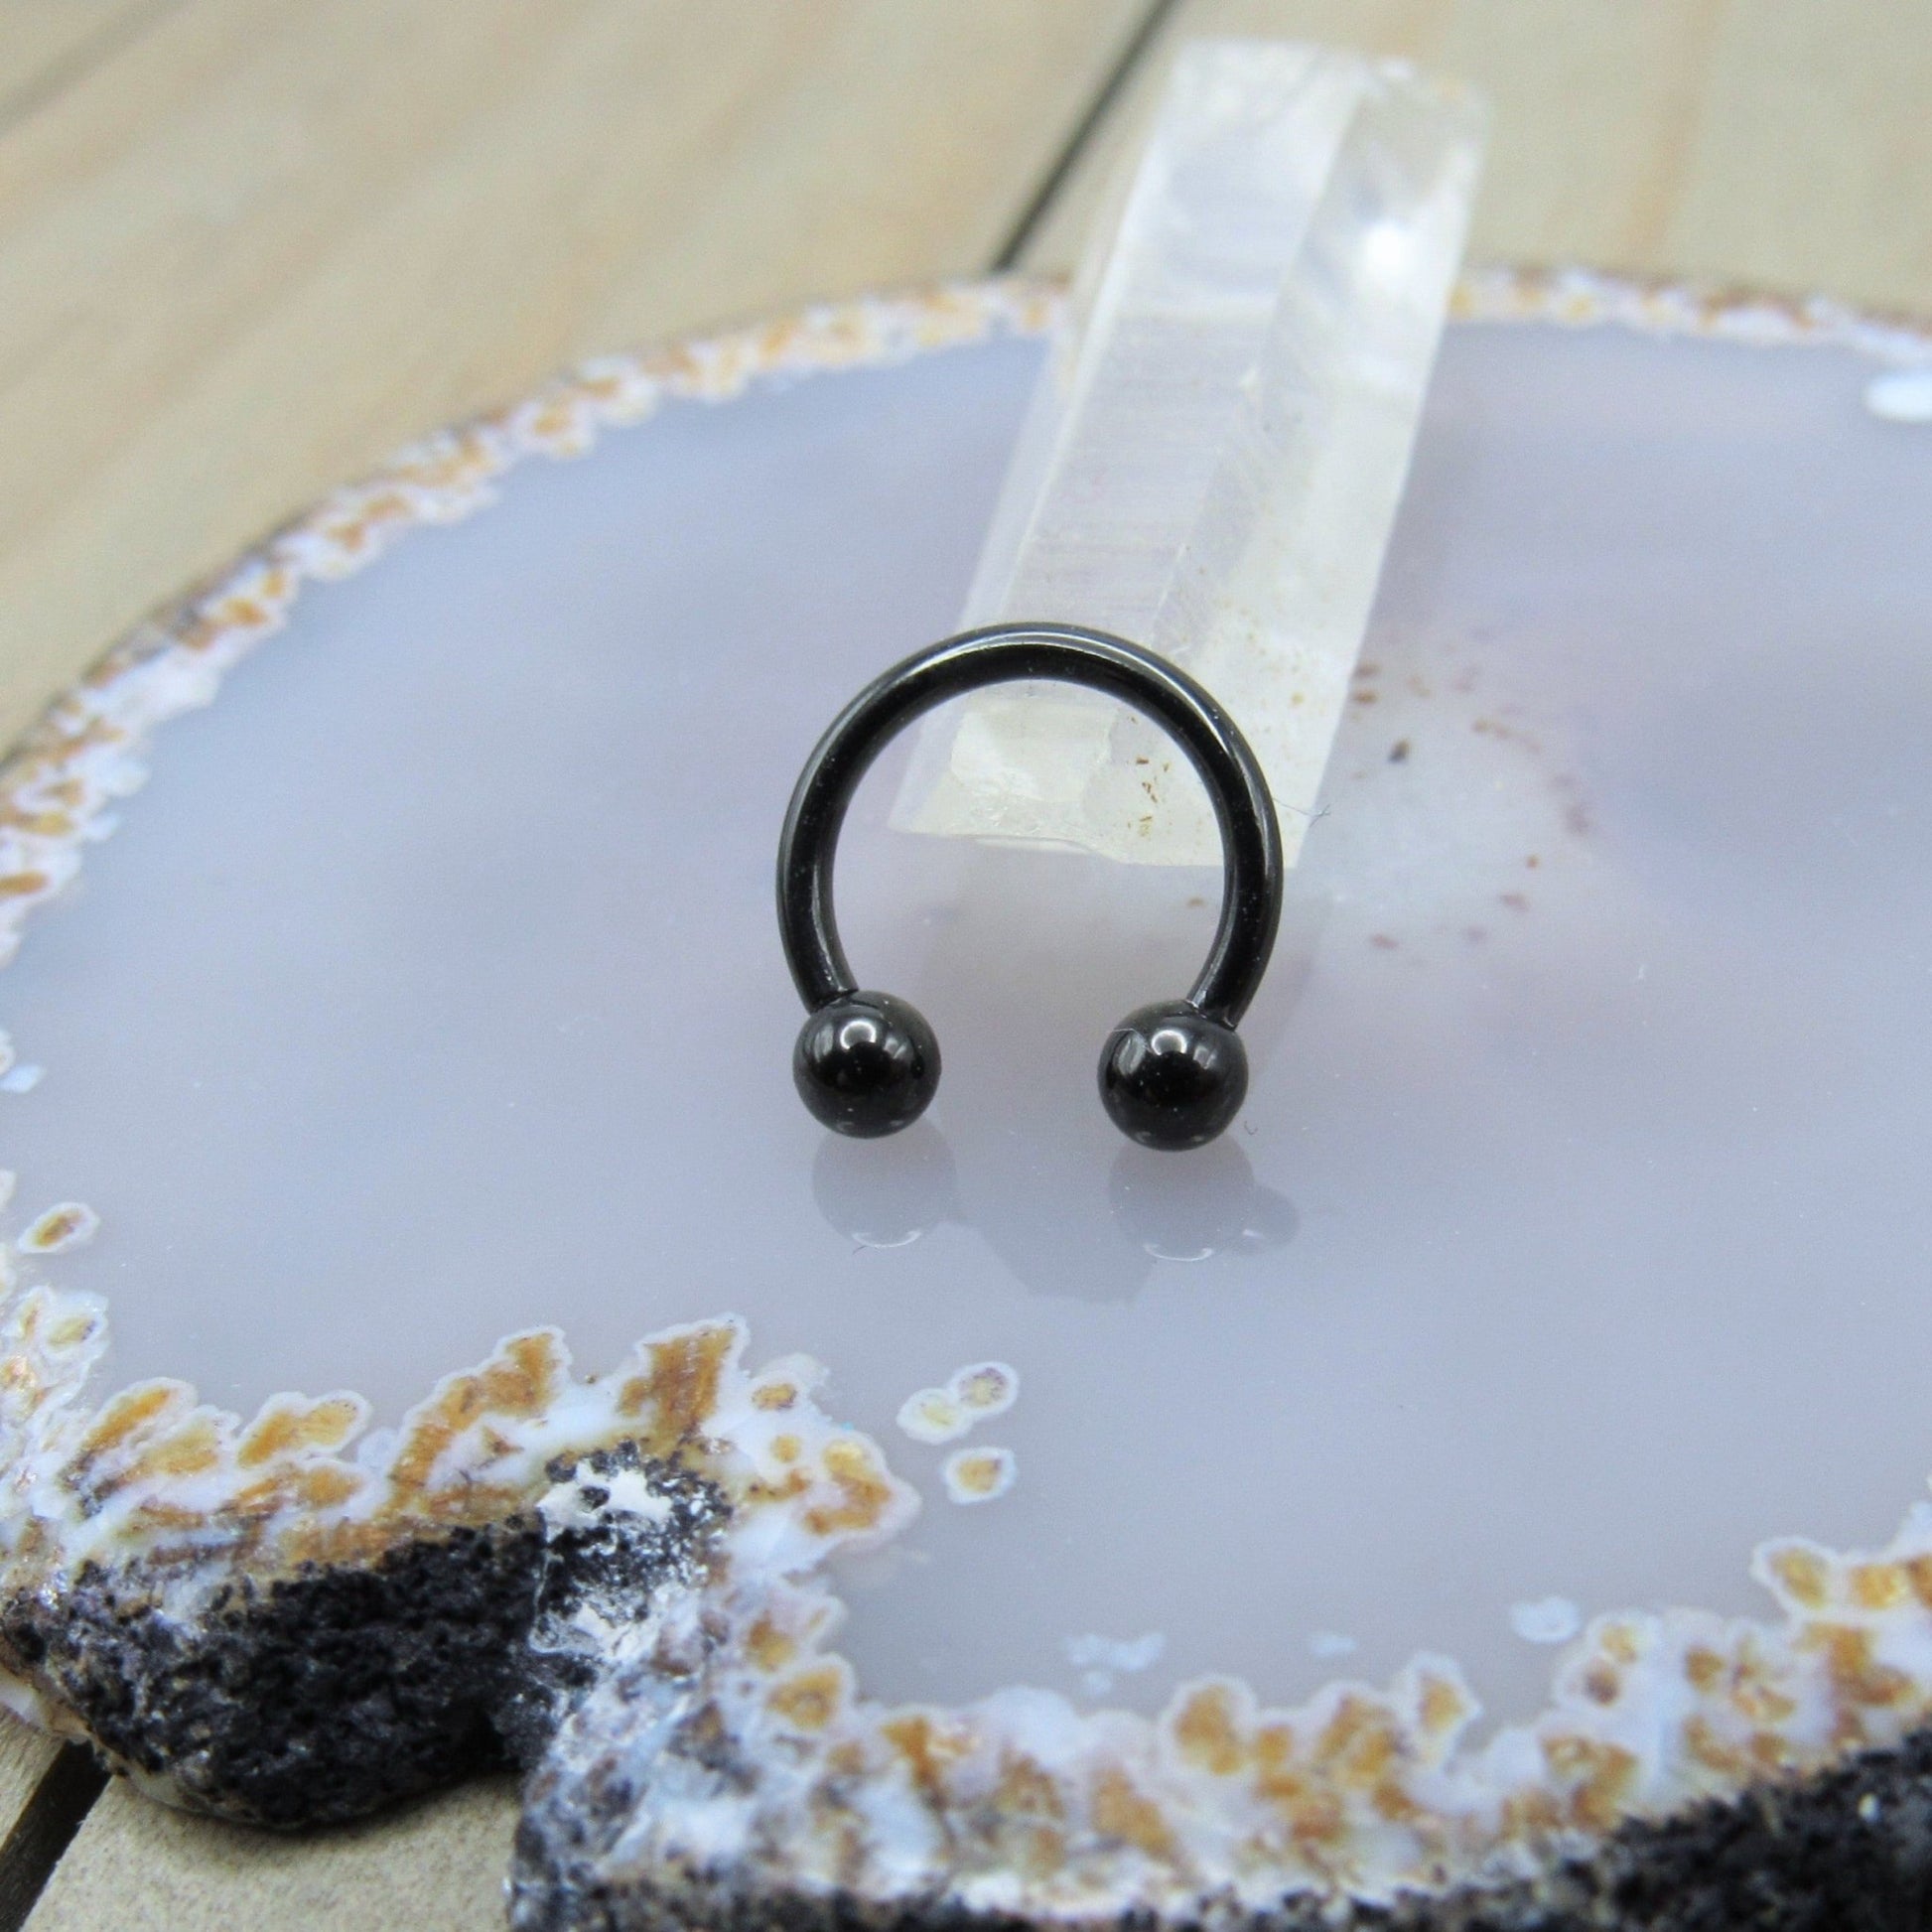 Black horseshoe septum ring 16g 5/16" helix cartilage piercing hoop earring 3mm externally threaded ball ends - Siren Body Jewelry